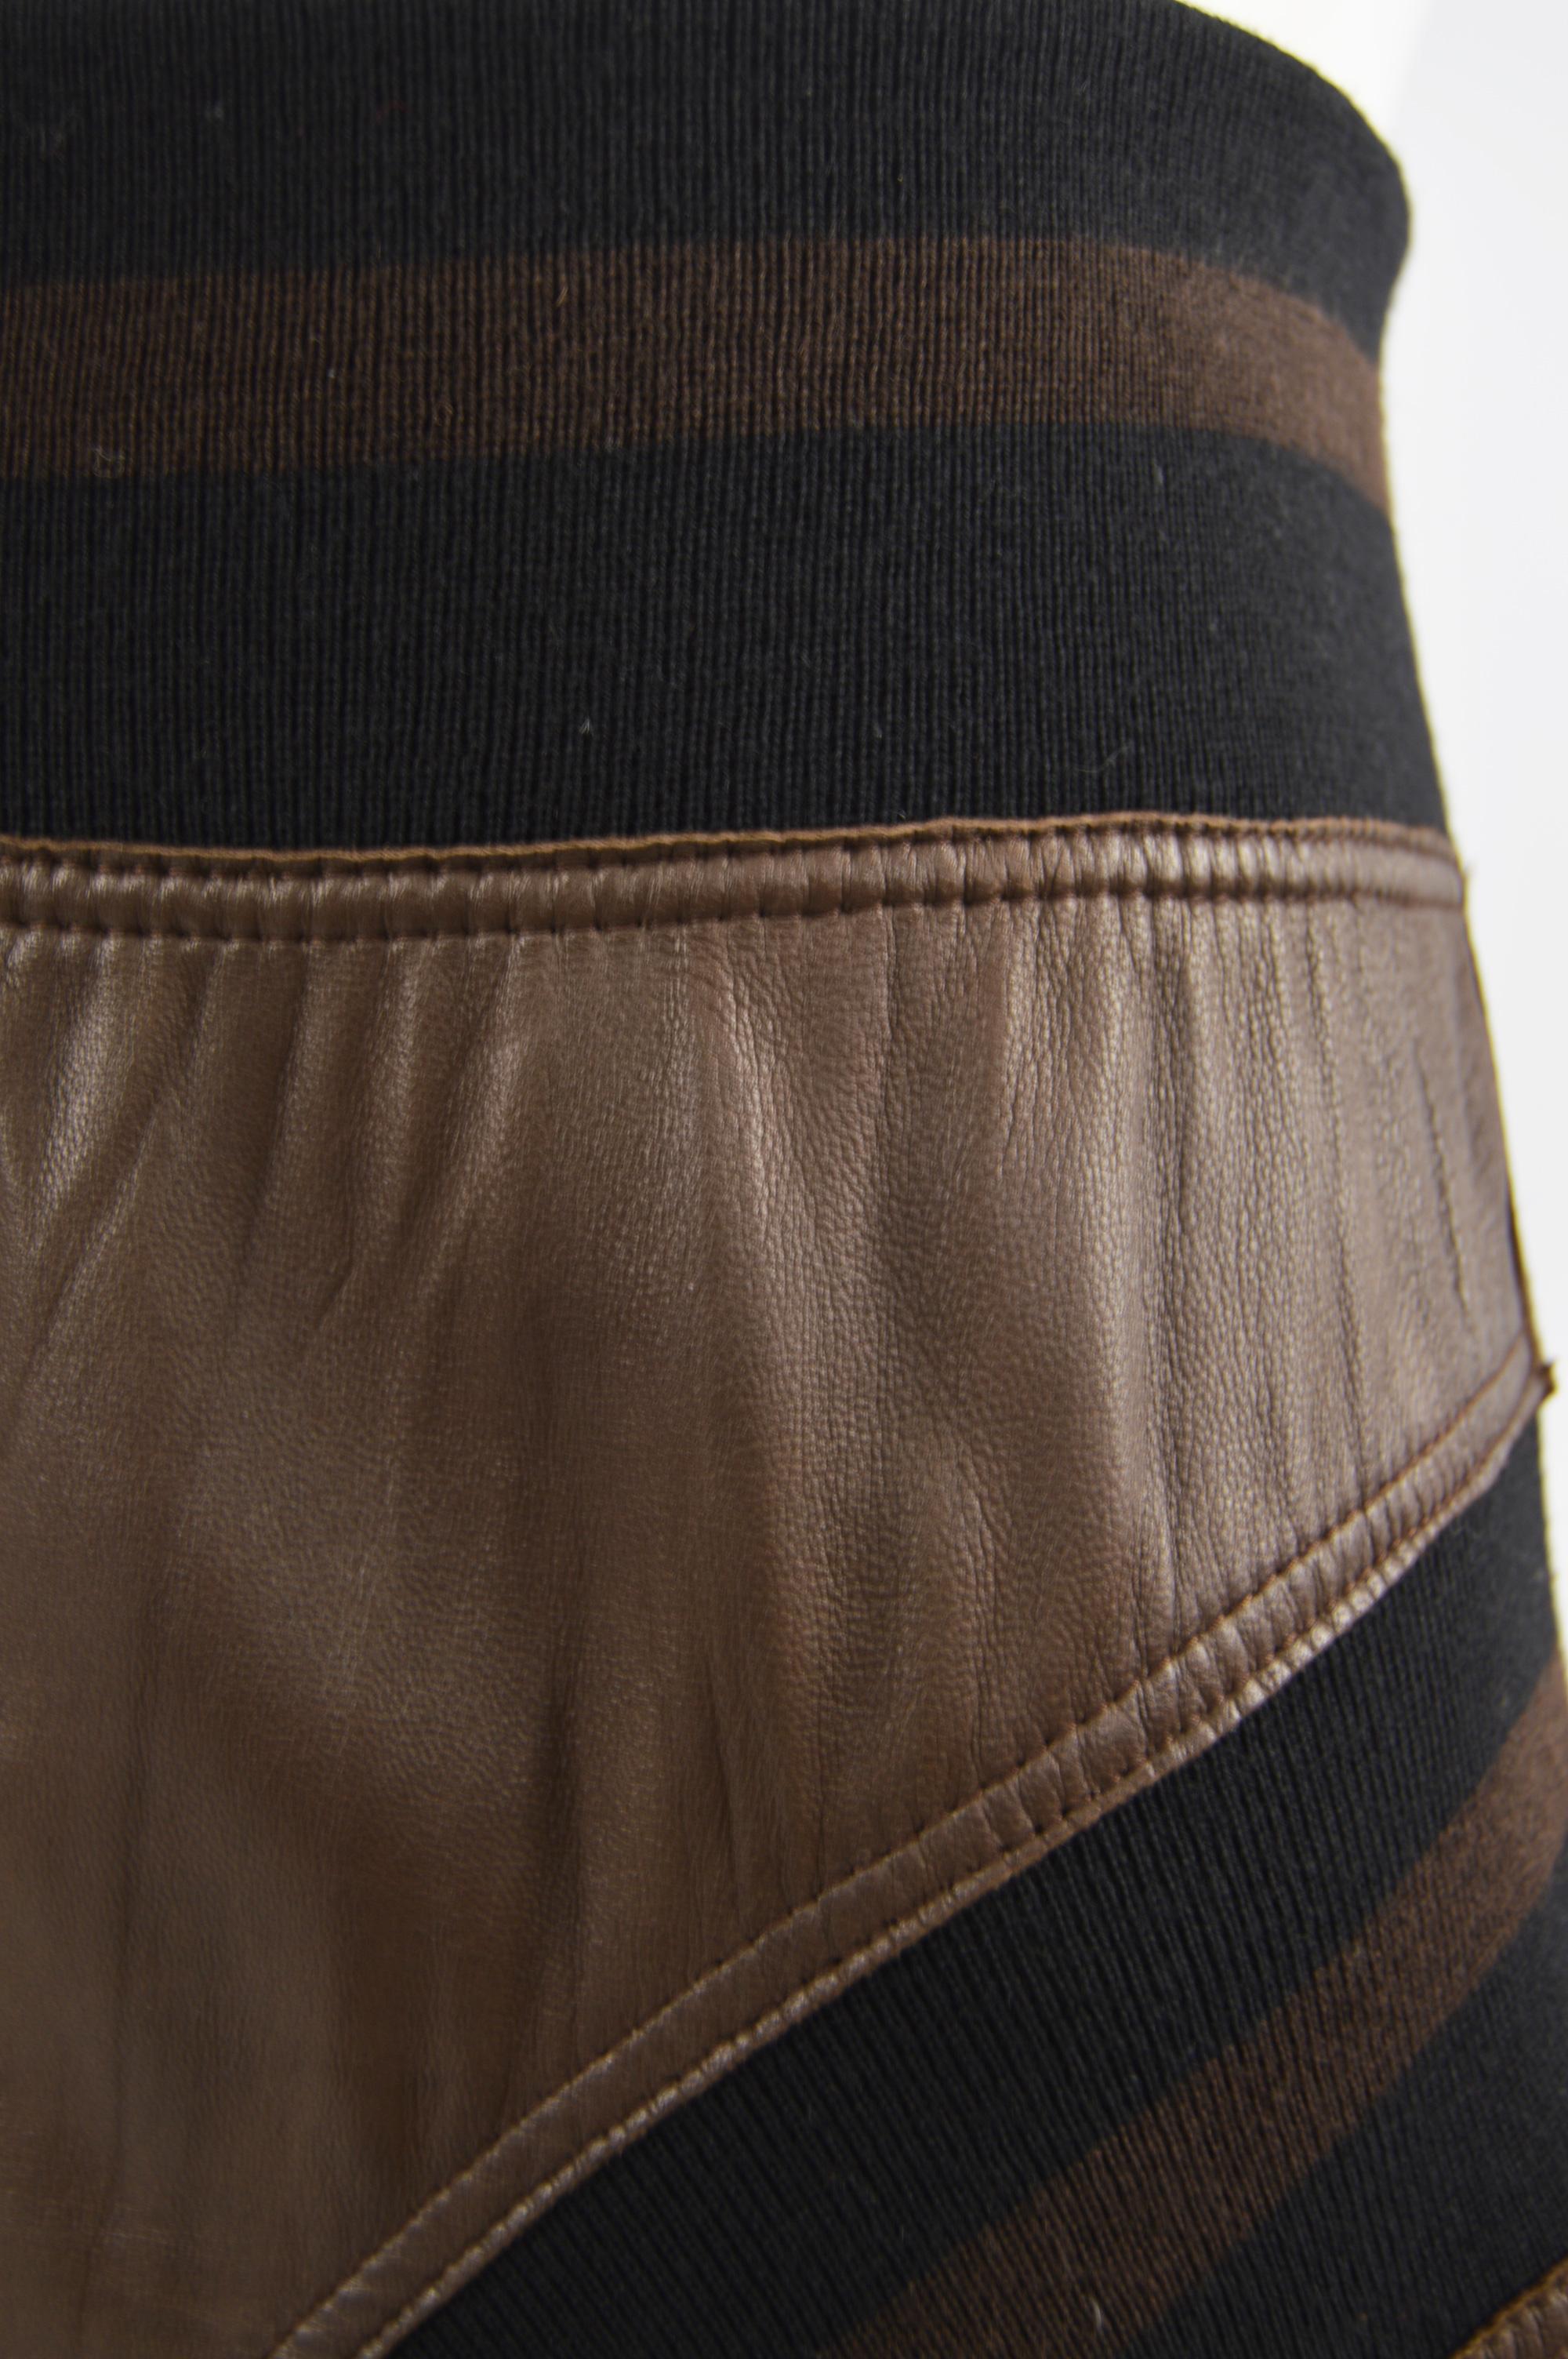 Black Jean Paul Gaultier Sheepskin Leather Vintage Skirt For Sale